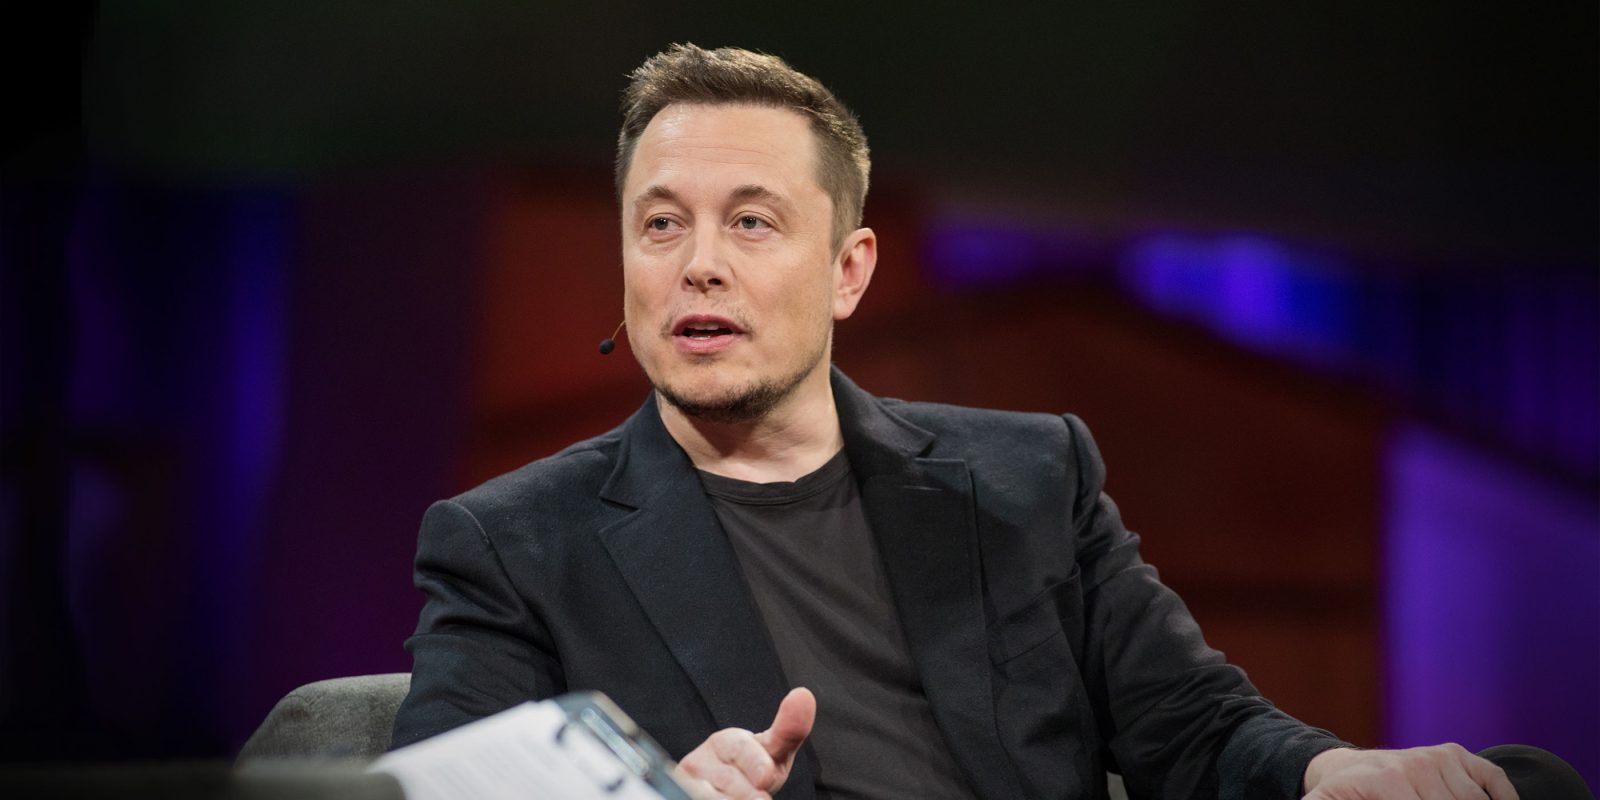 Elon Musk biography on the way